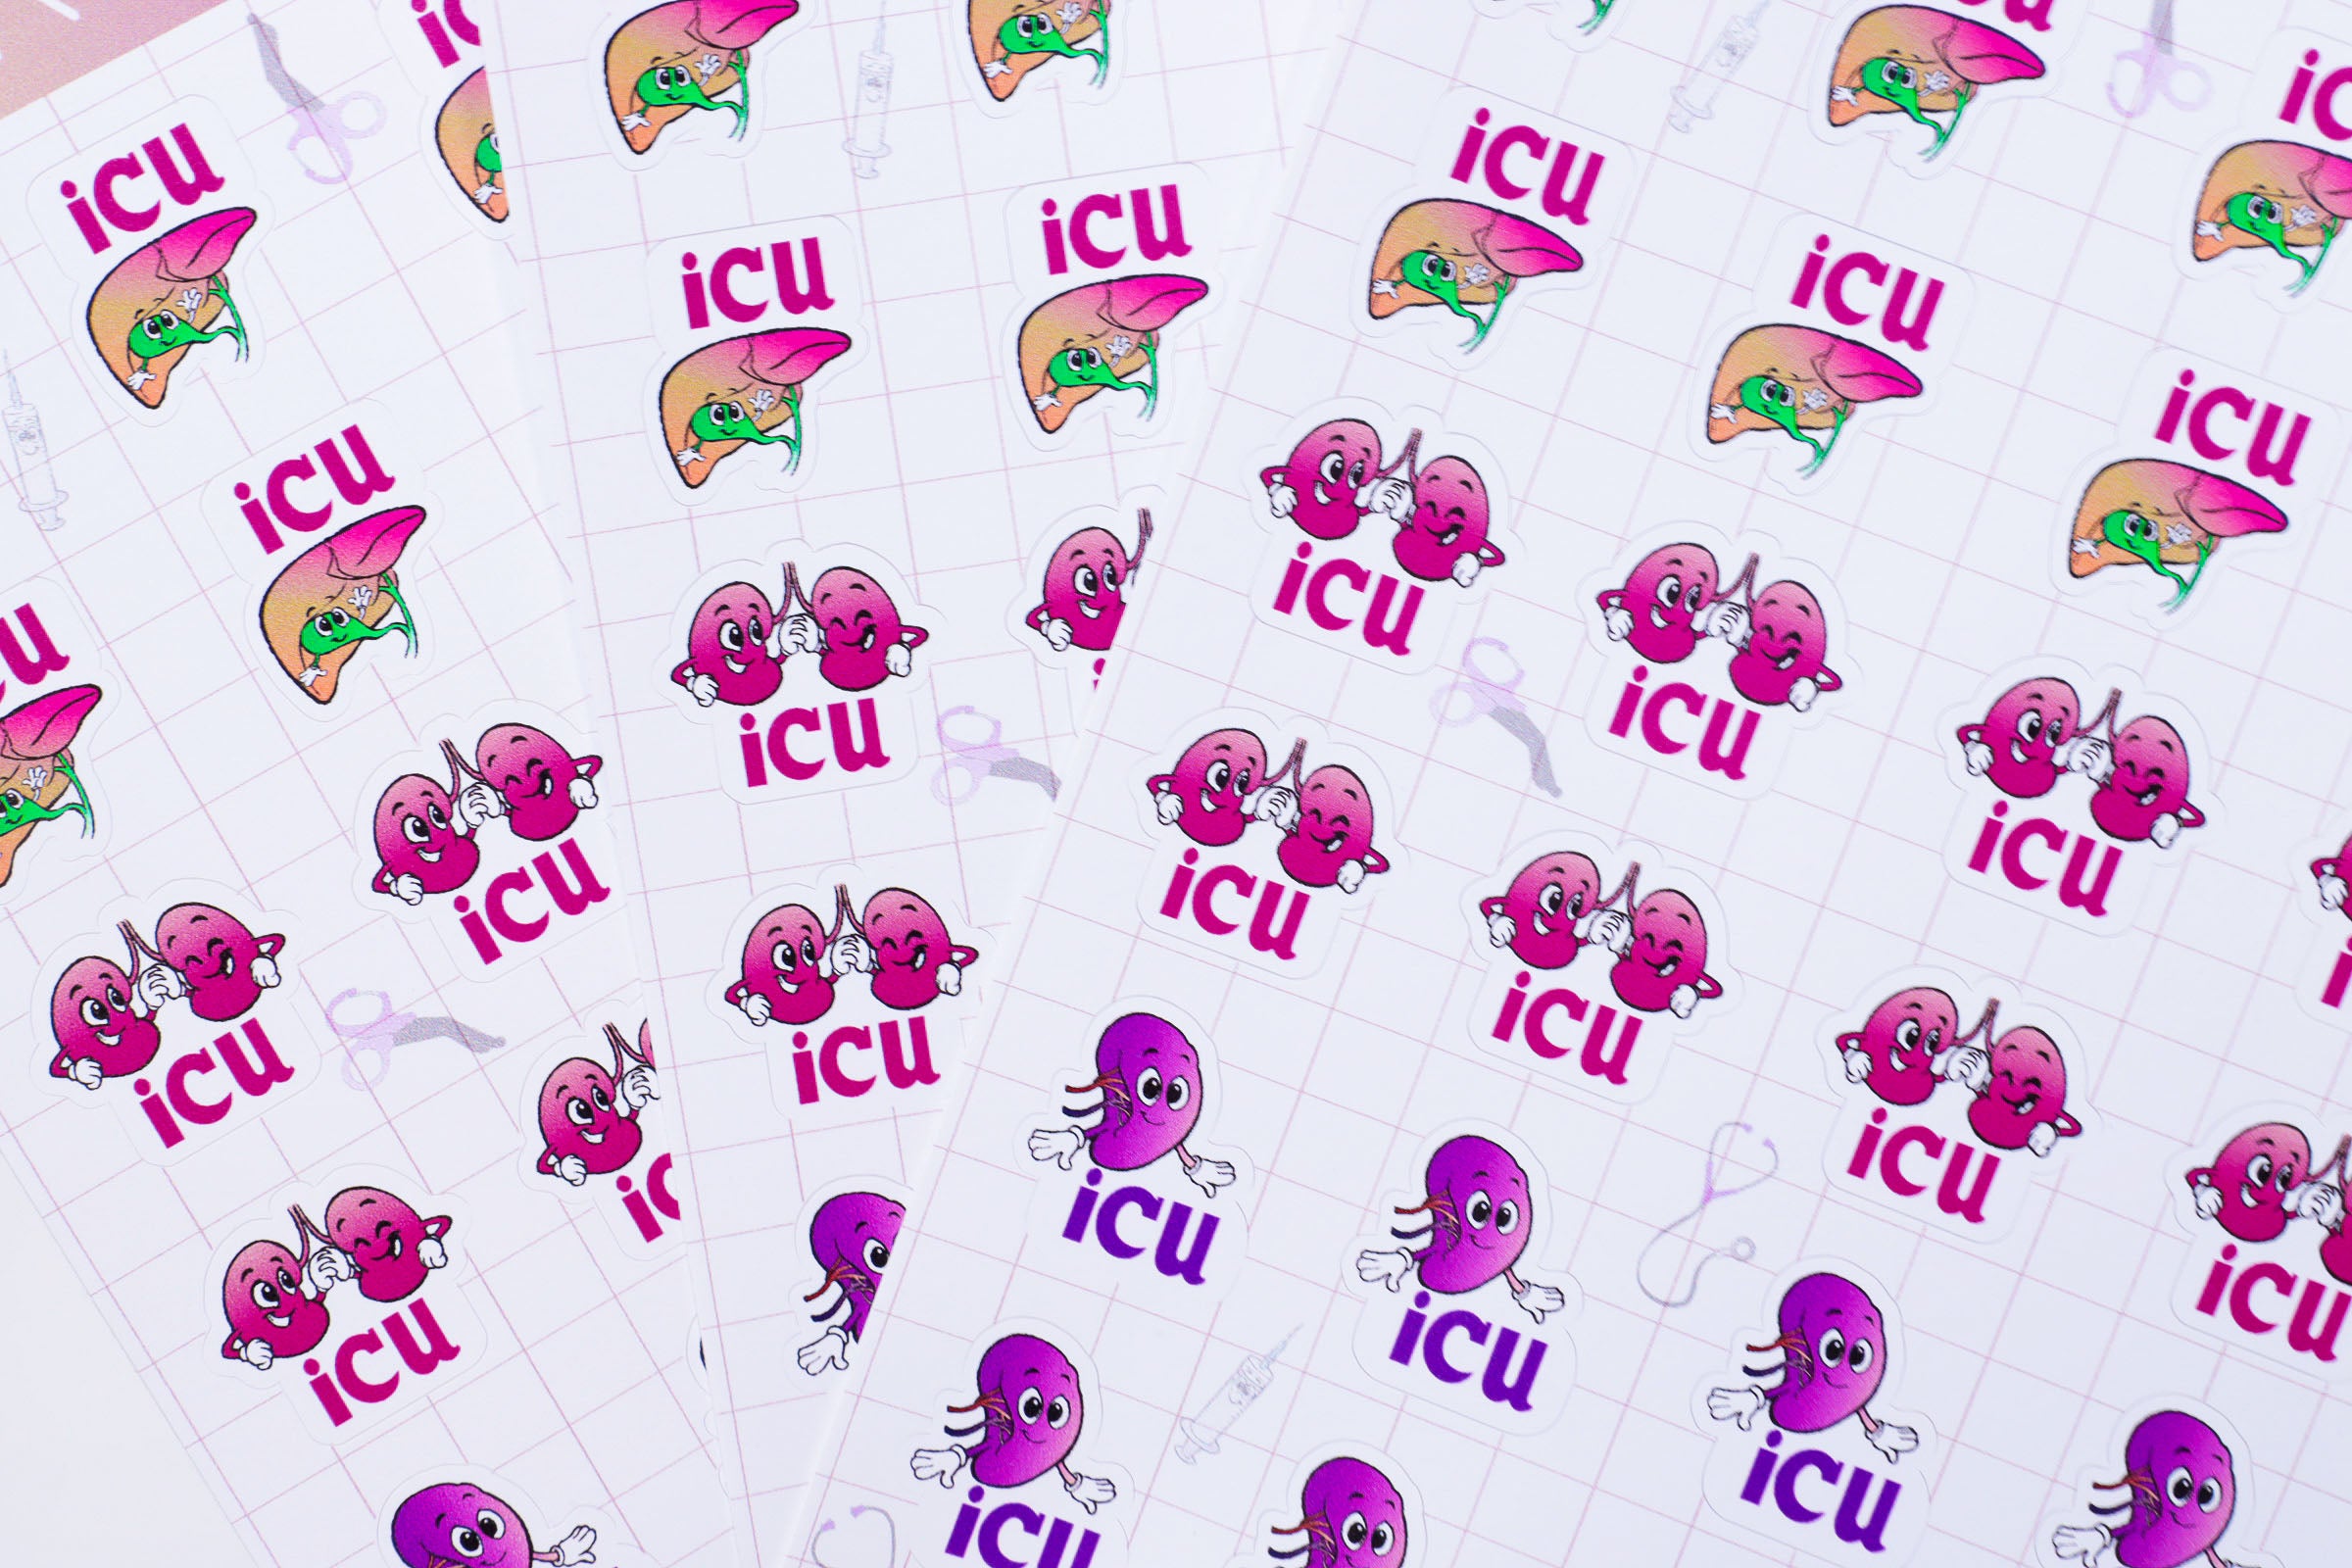 ICU Sticker Sheet